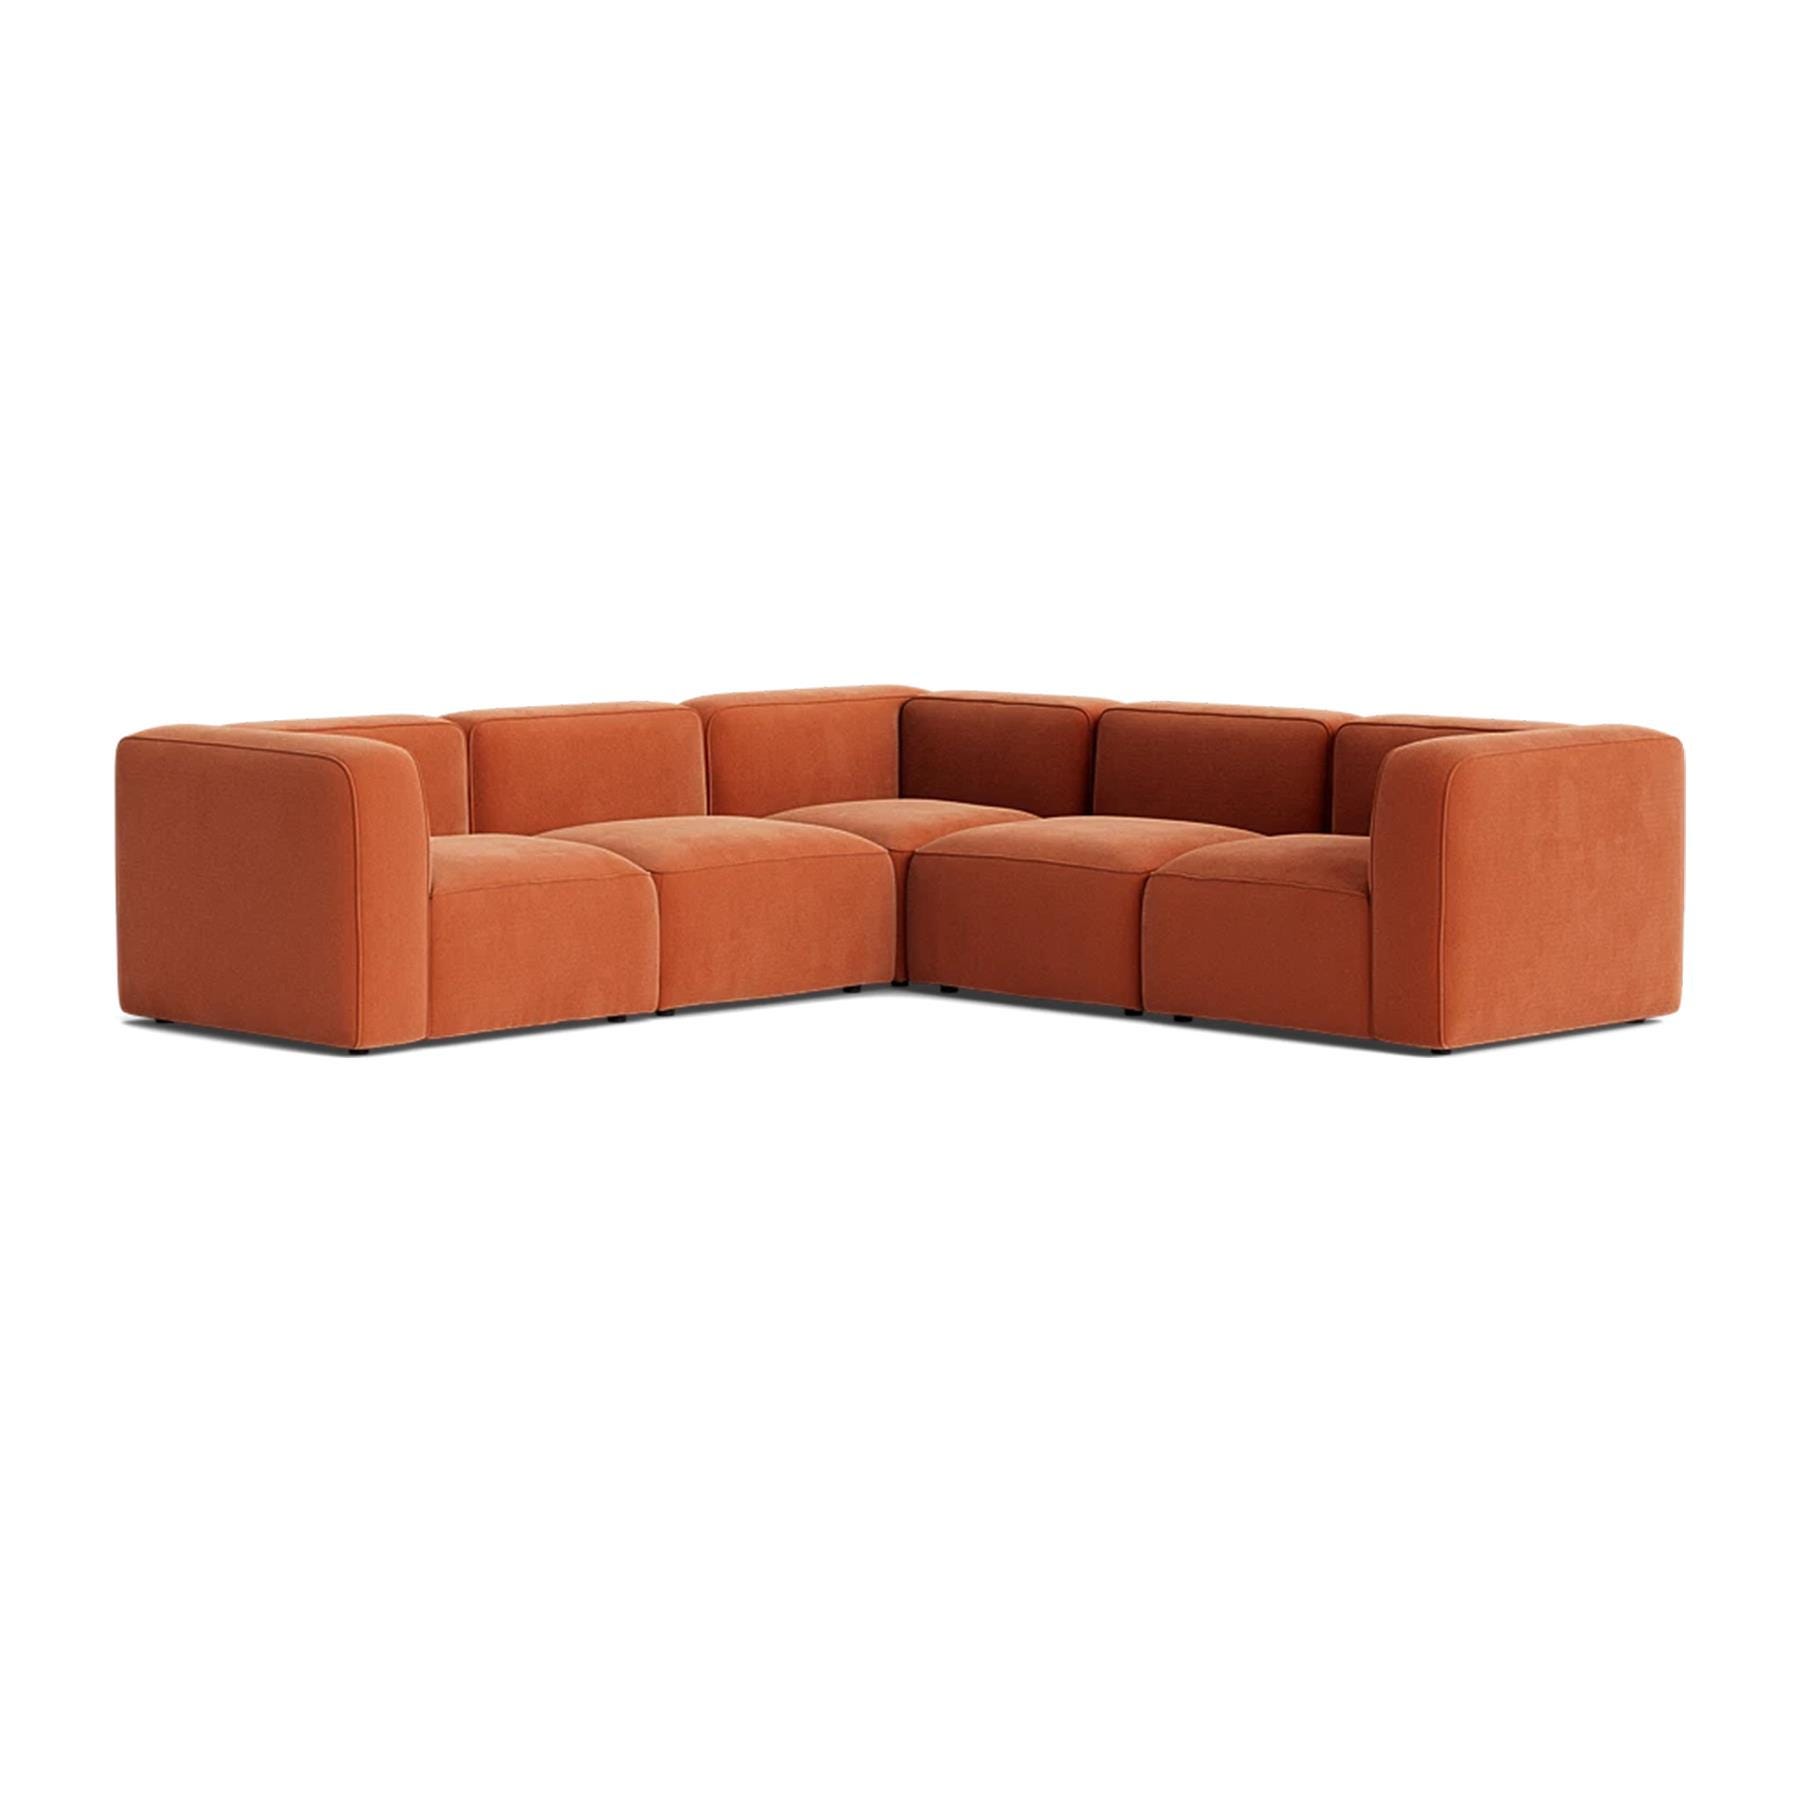 Make Nordic Basecamp Corner Sofa Nordic Velvet 100 Orange Designer Furniture From Holloways Of Ludlow